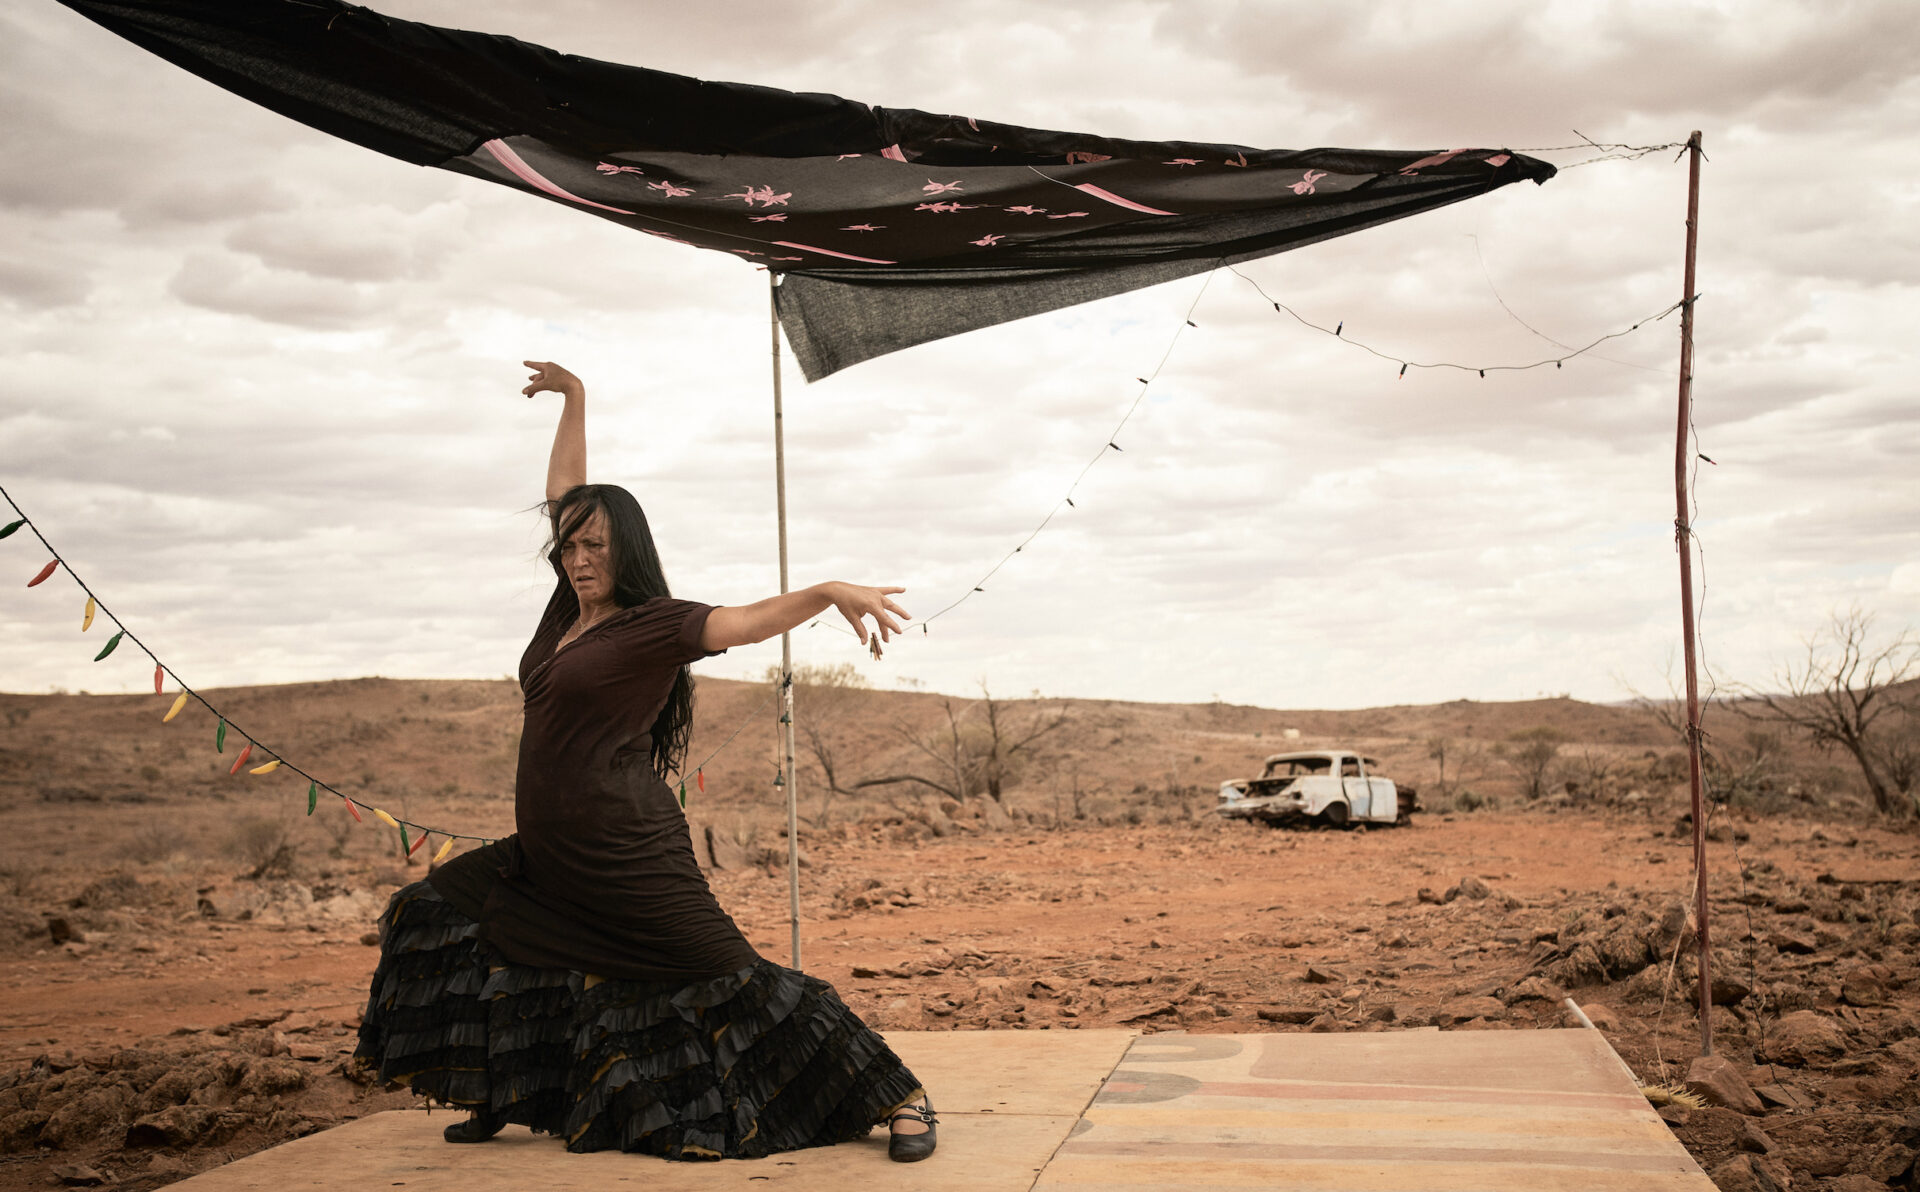 Carmen dancing in the desert